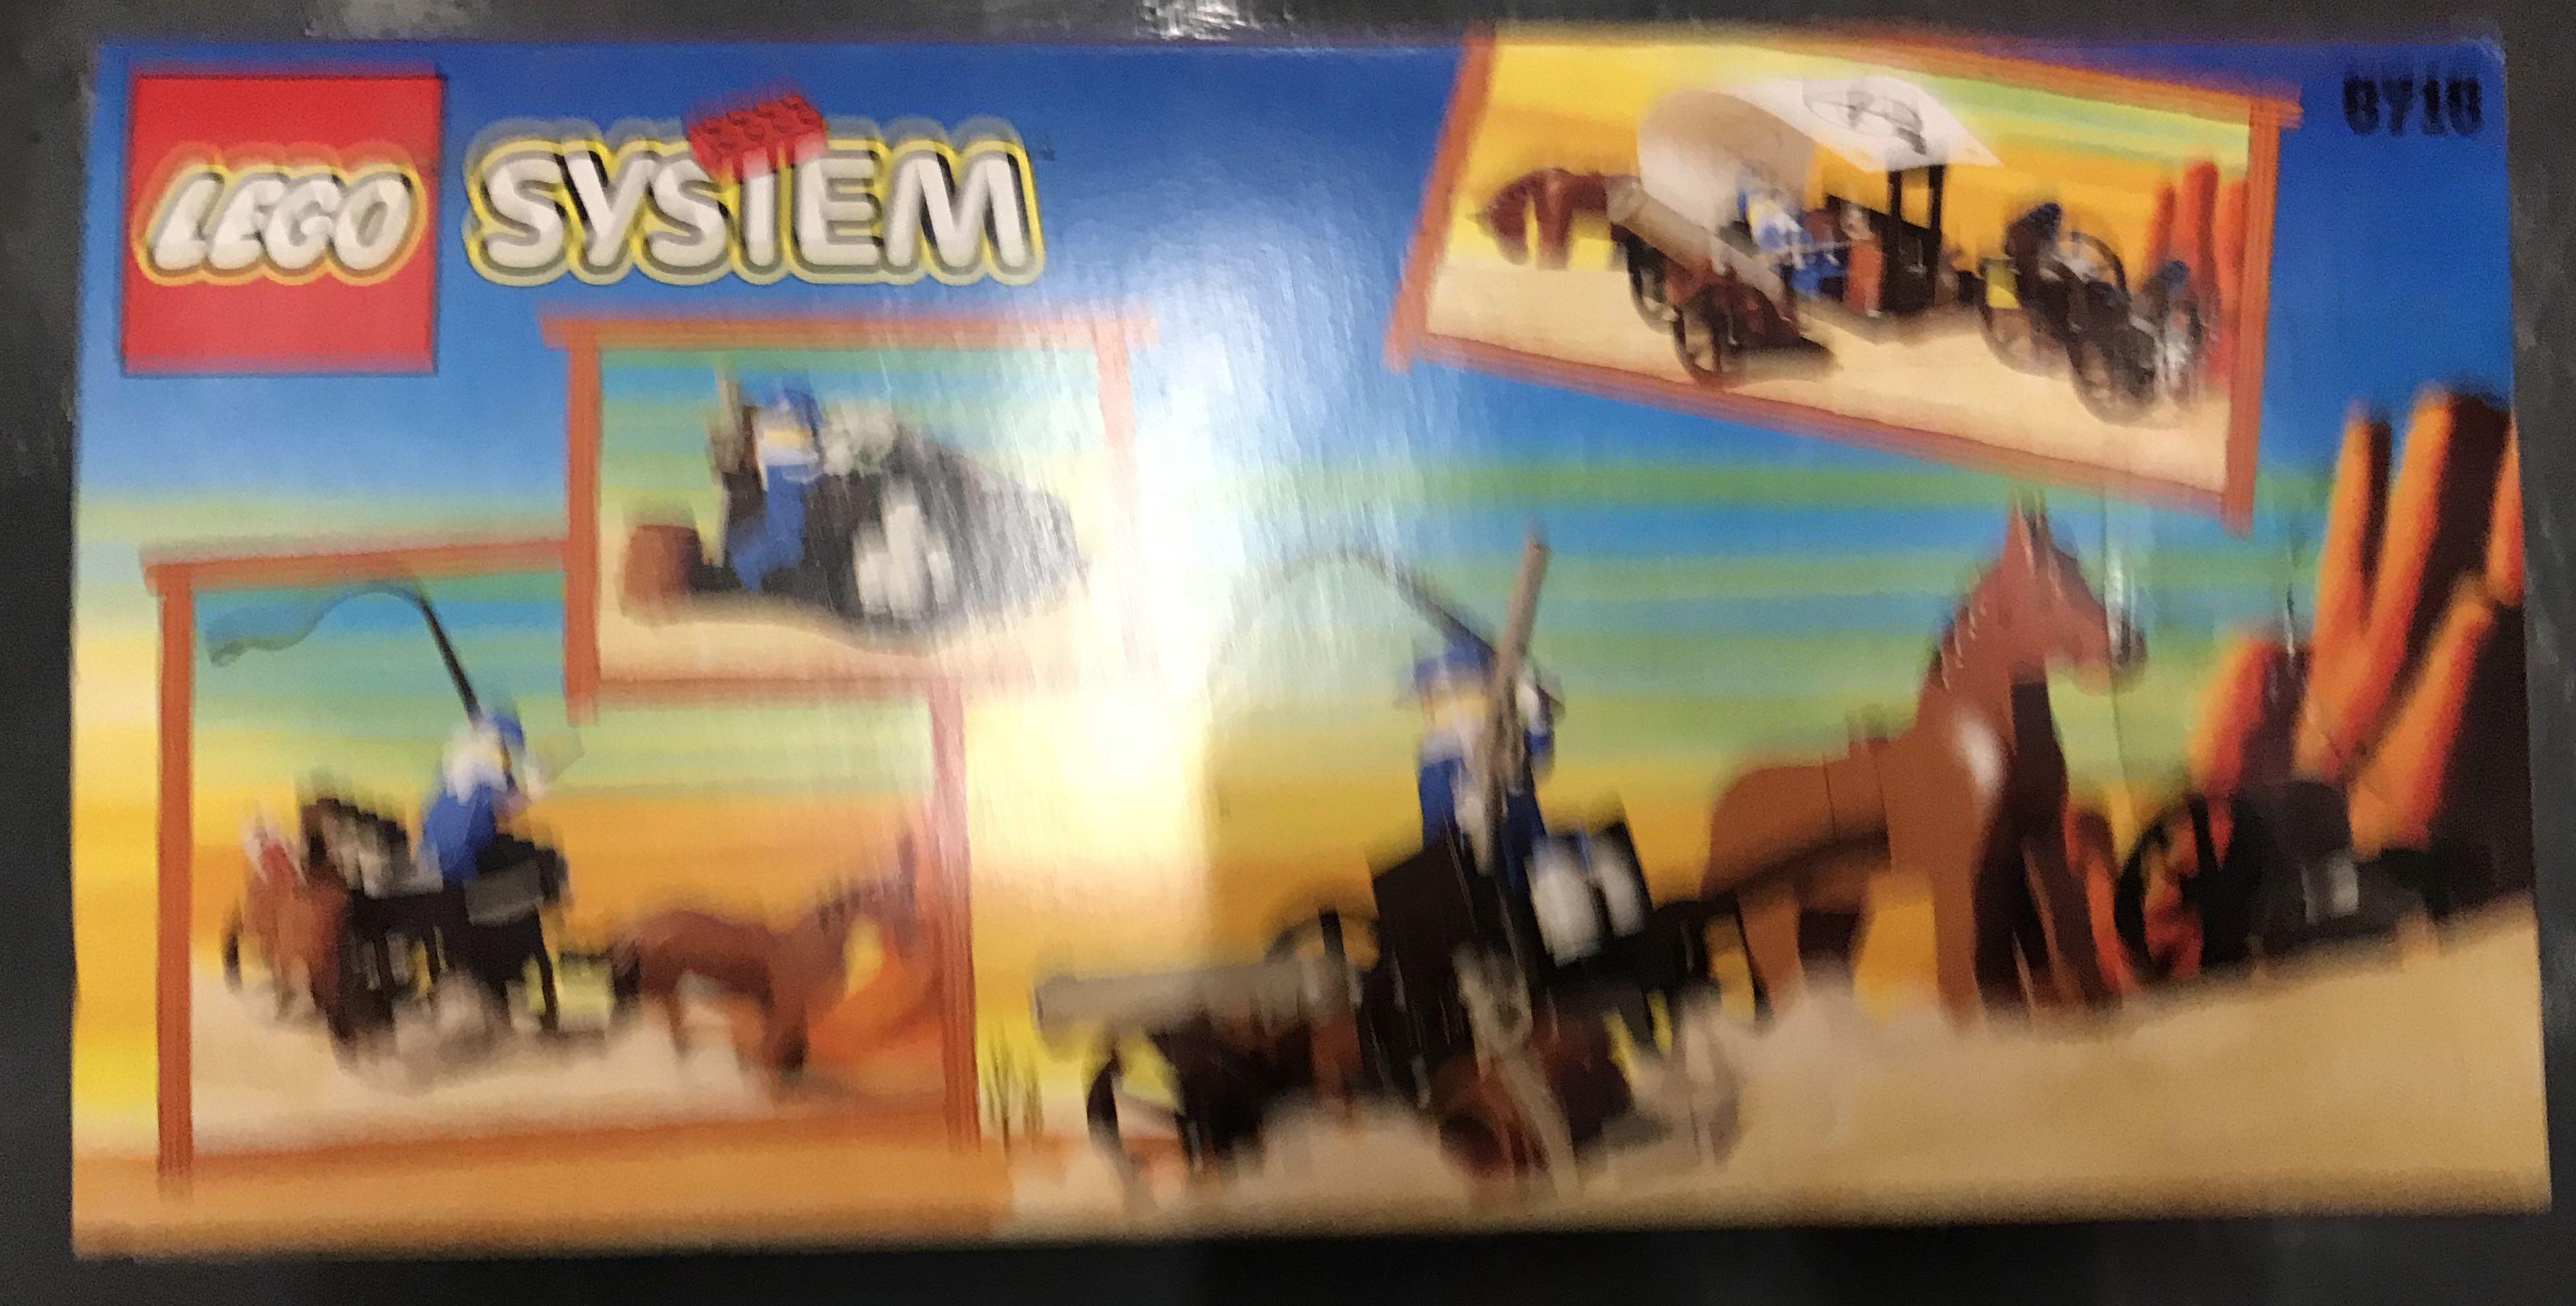 絕版全新未開封Lego System 6716 Western Wild West Yankee Wagon